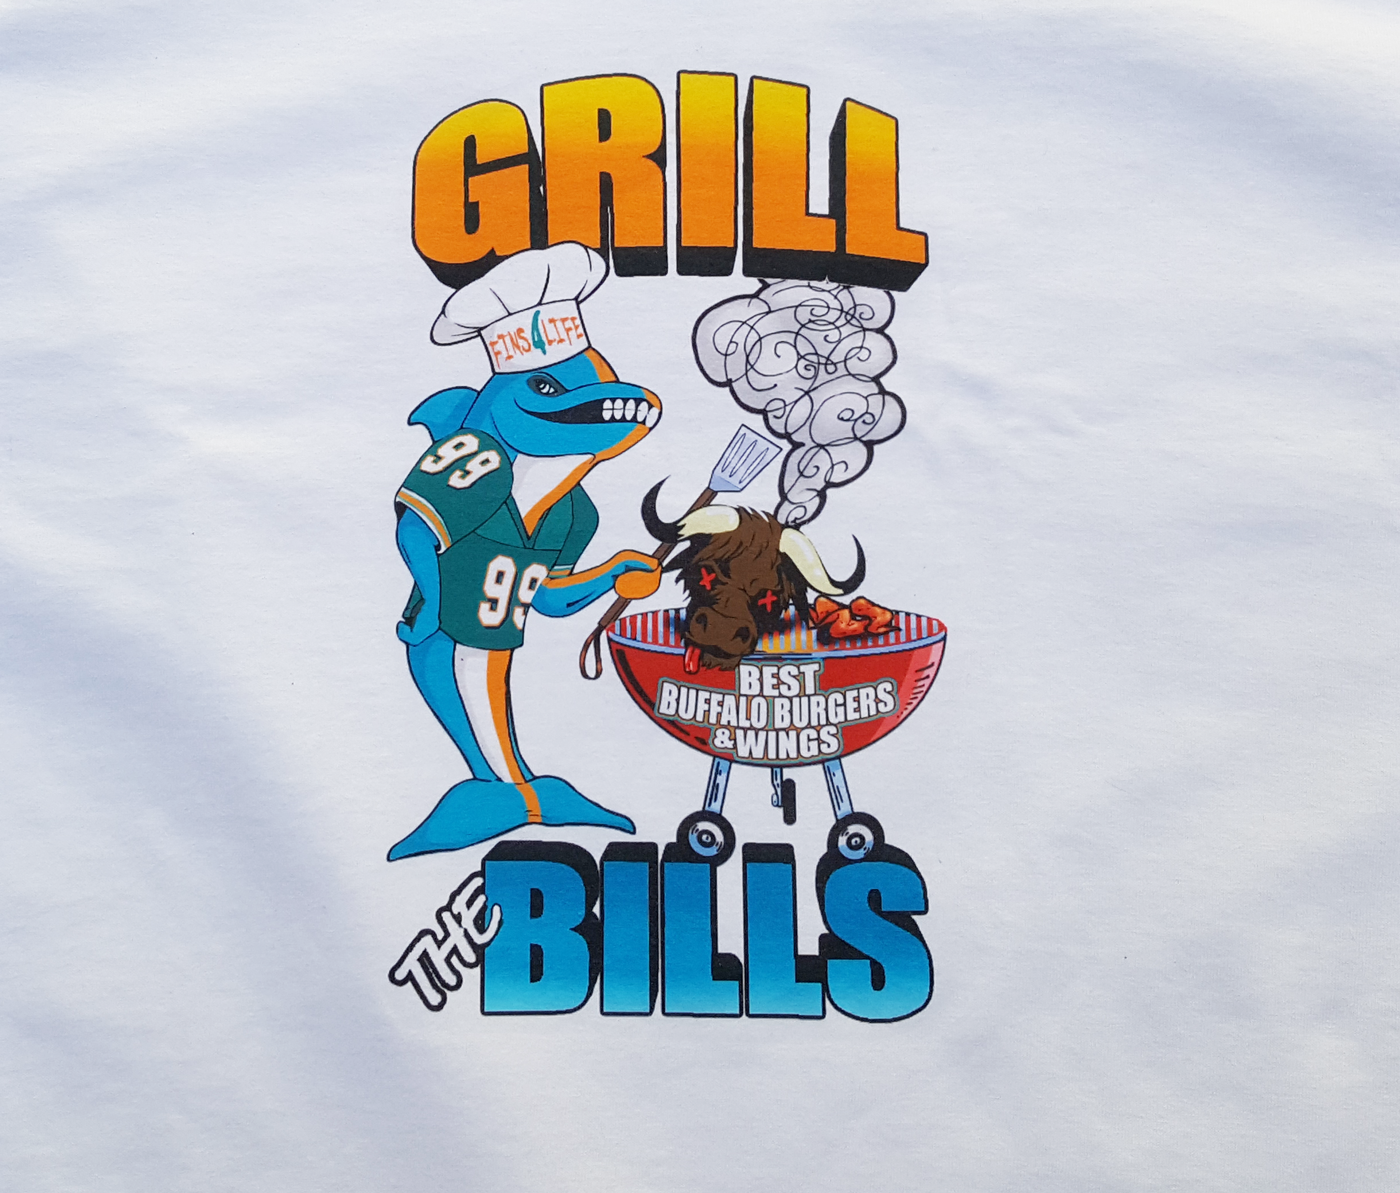 Grill The Bills Tshirt